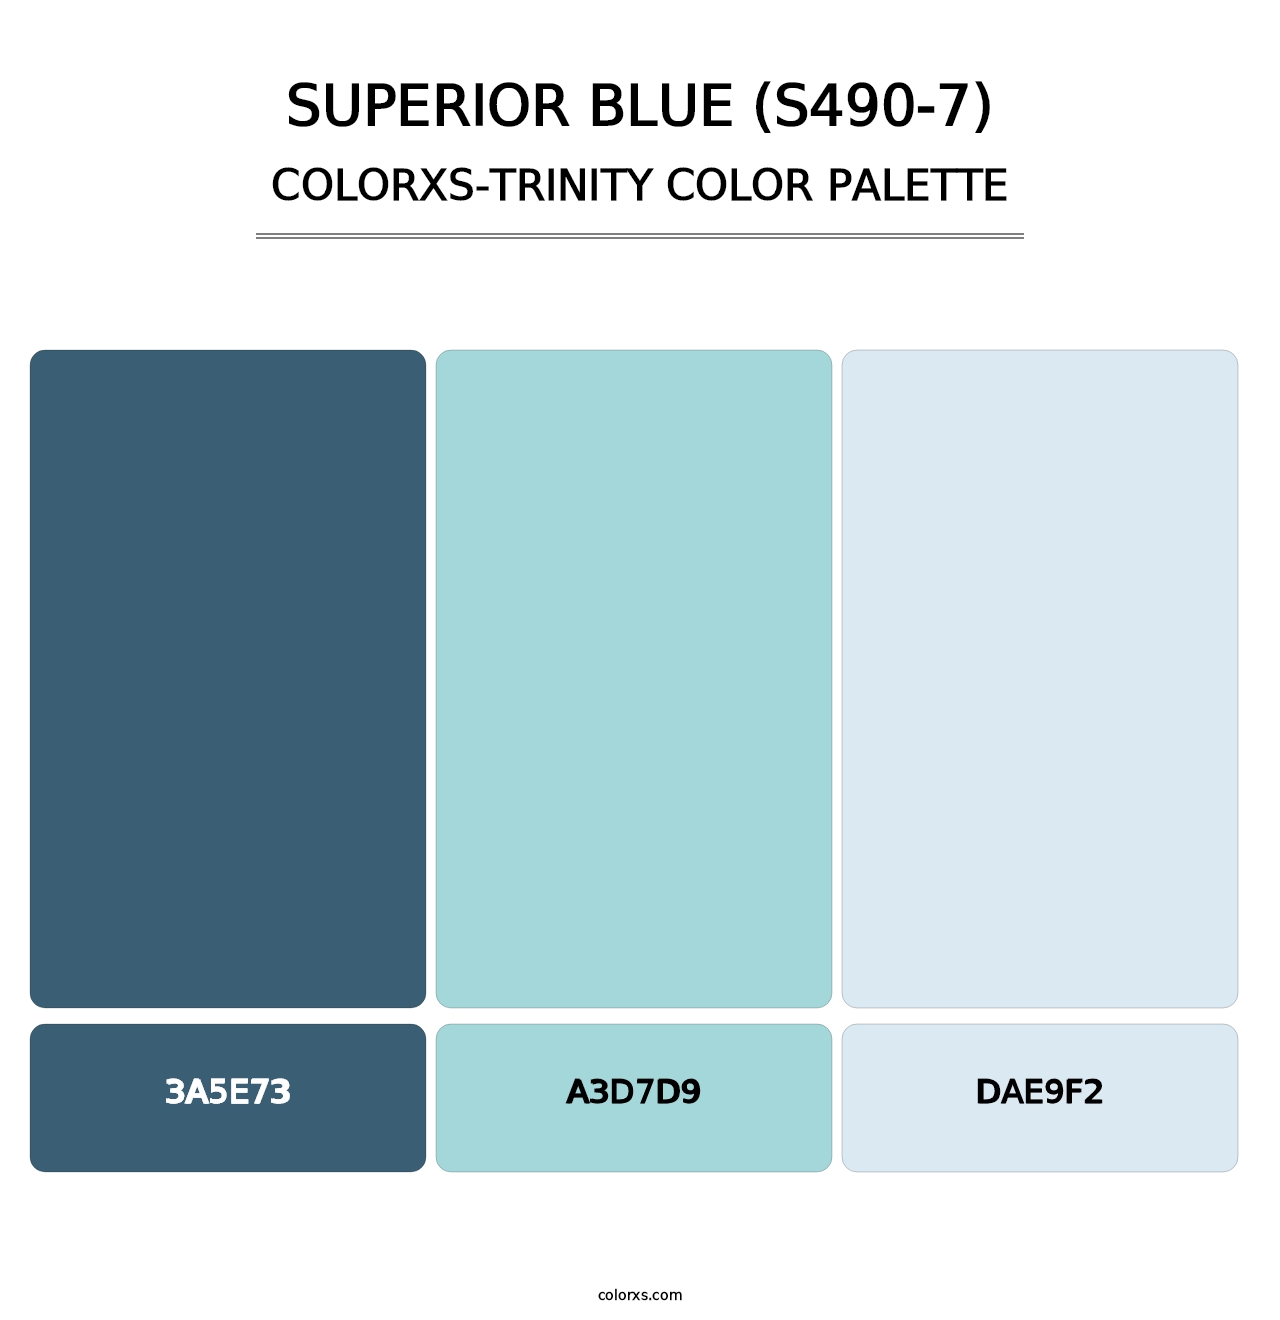 Superior Blue (S490-7) - Colorxs Trinity Palette